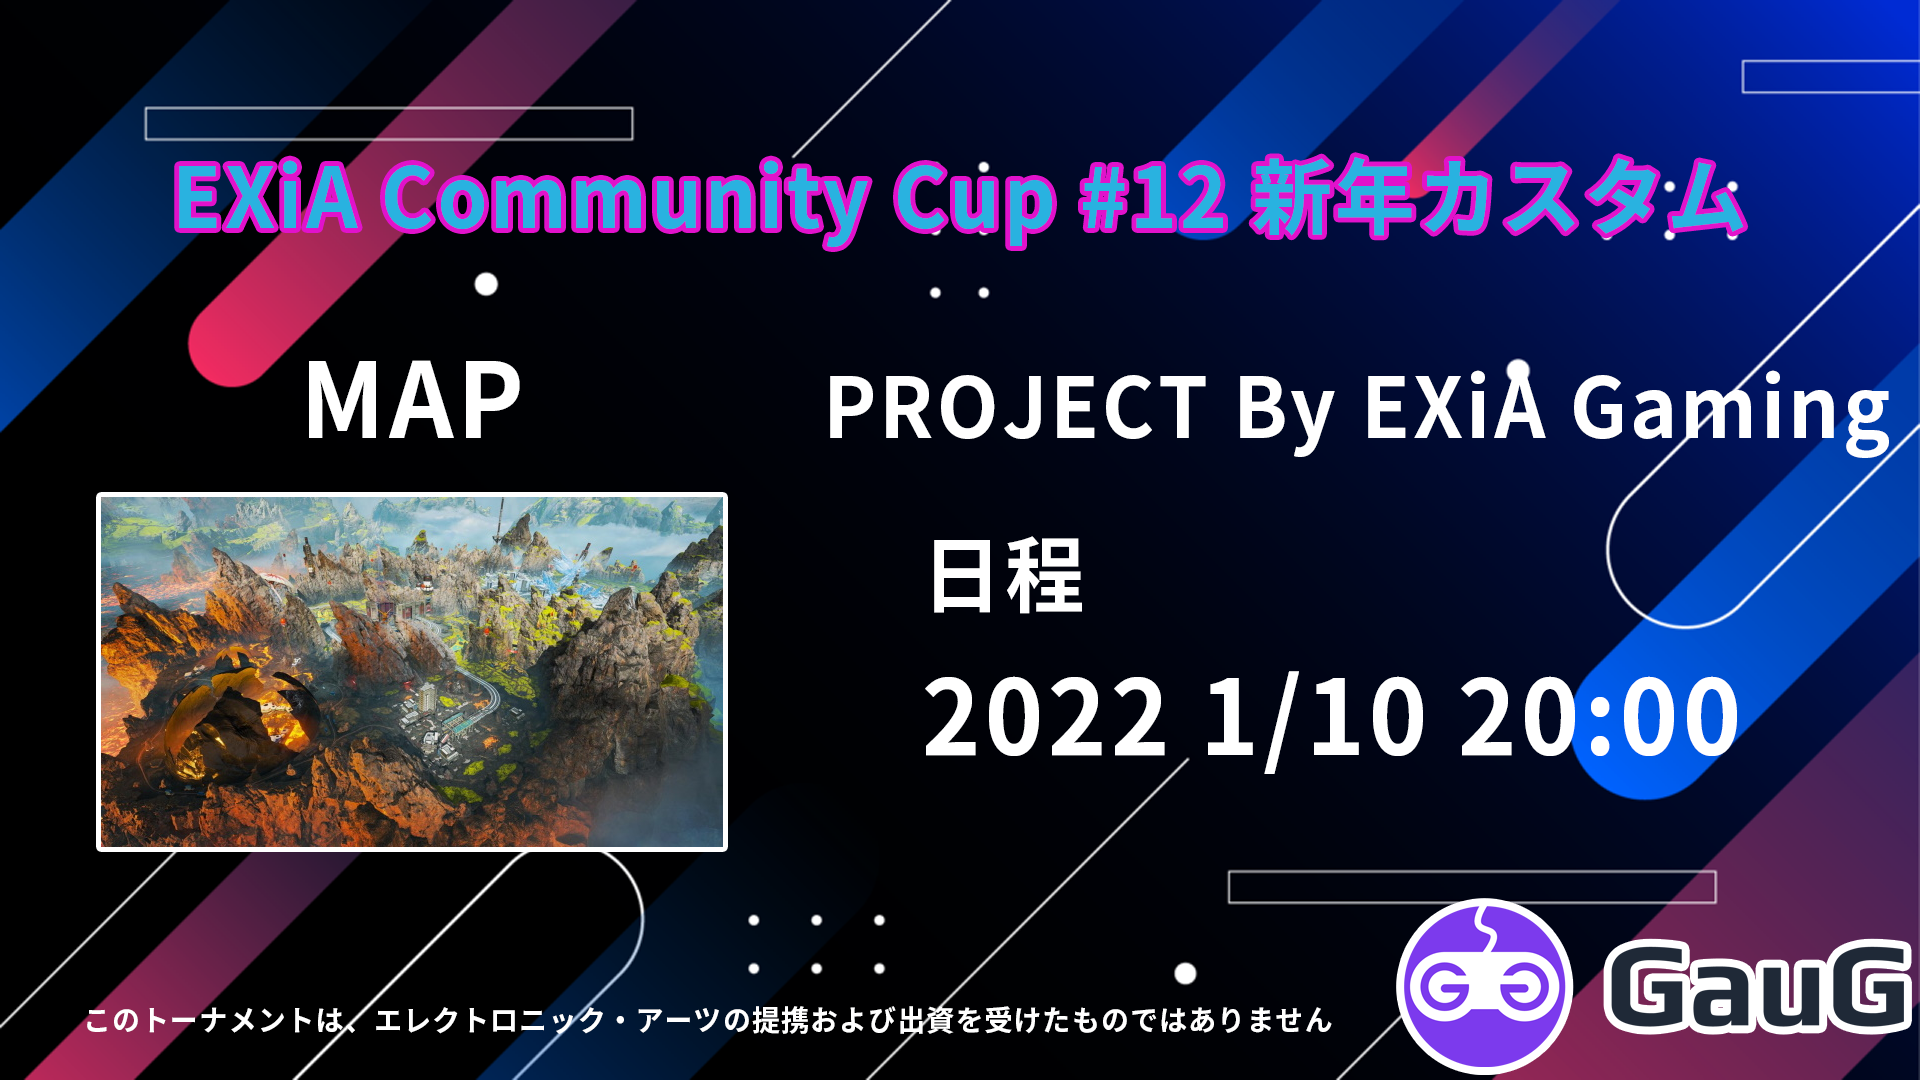 EXiA Community Cup #12